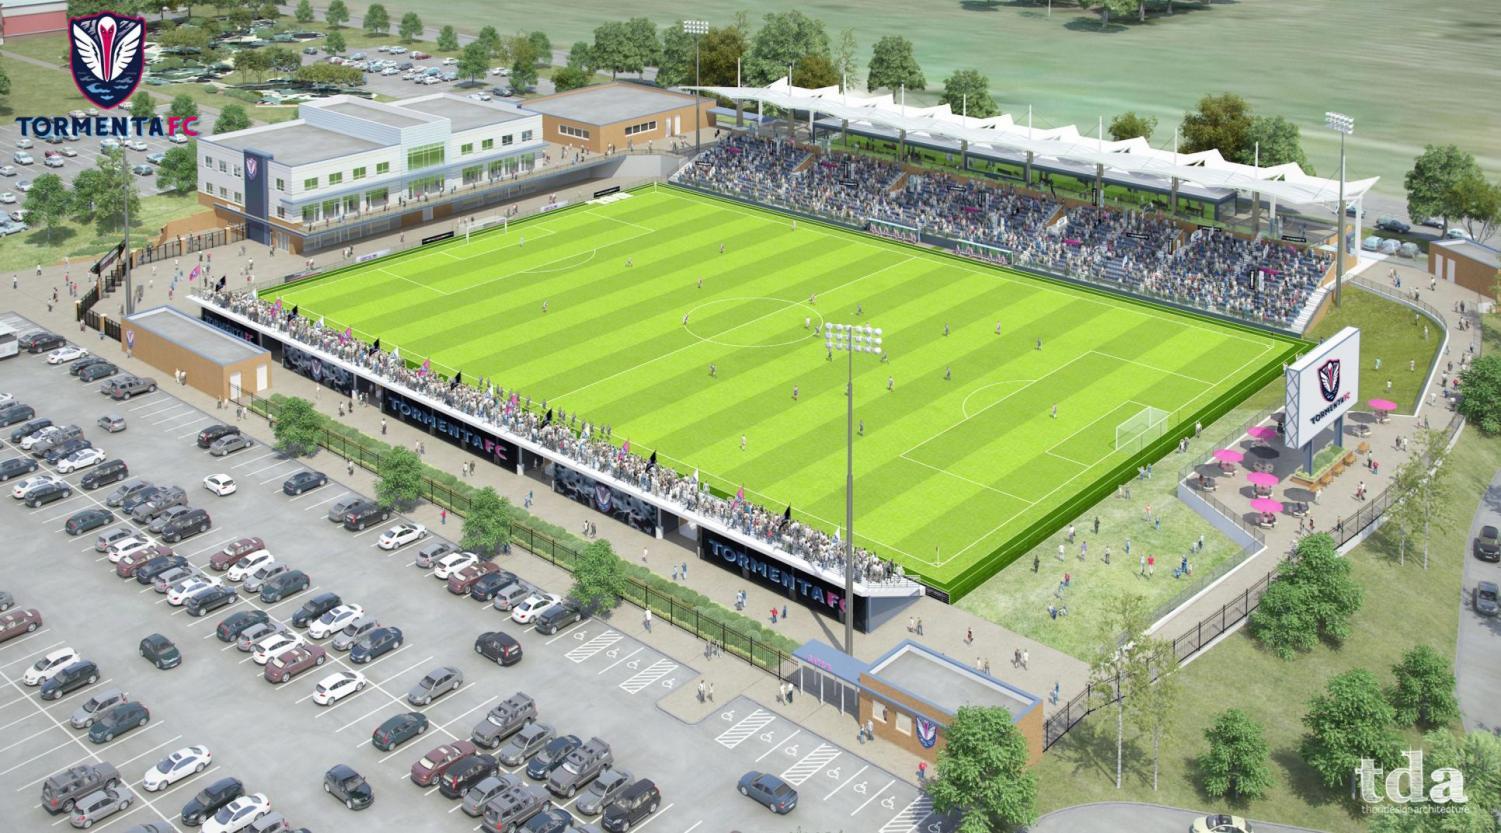 United+Soccer+League+to+build+new+stadium+in+Statesboro